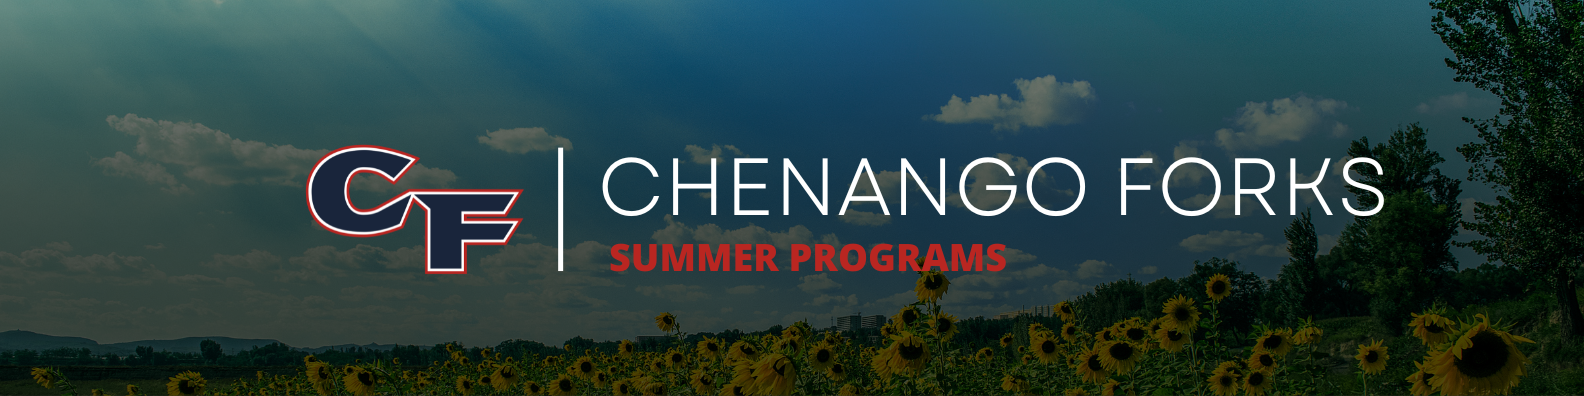 Summer Enrichment Programs